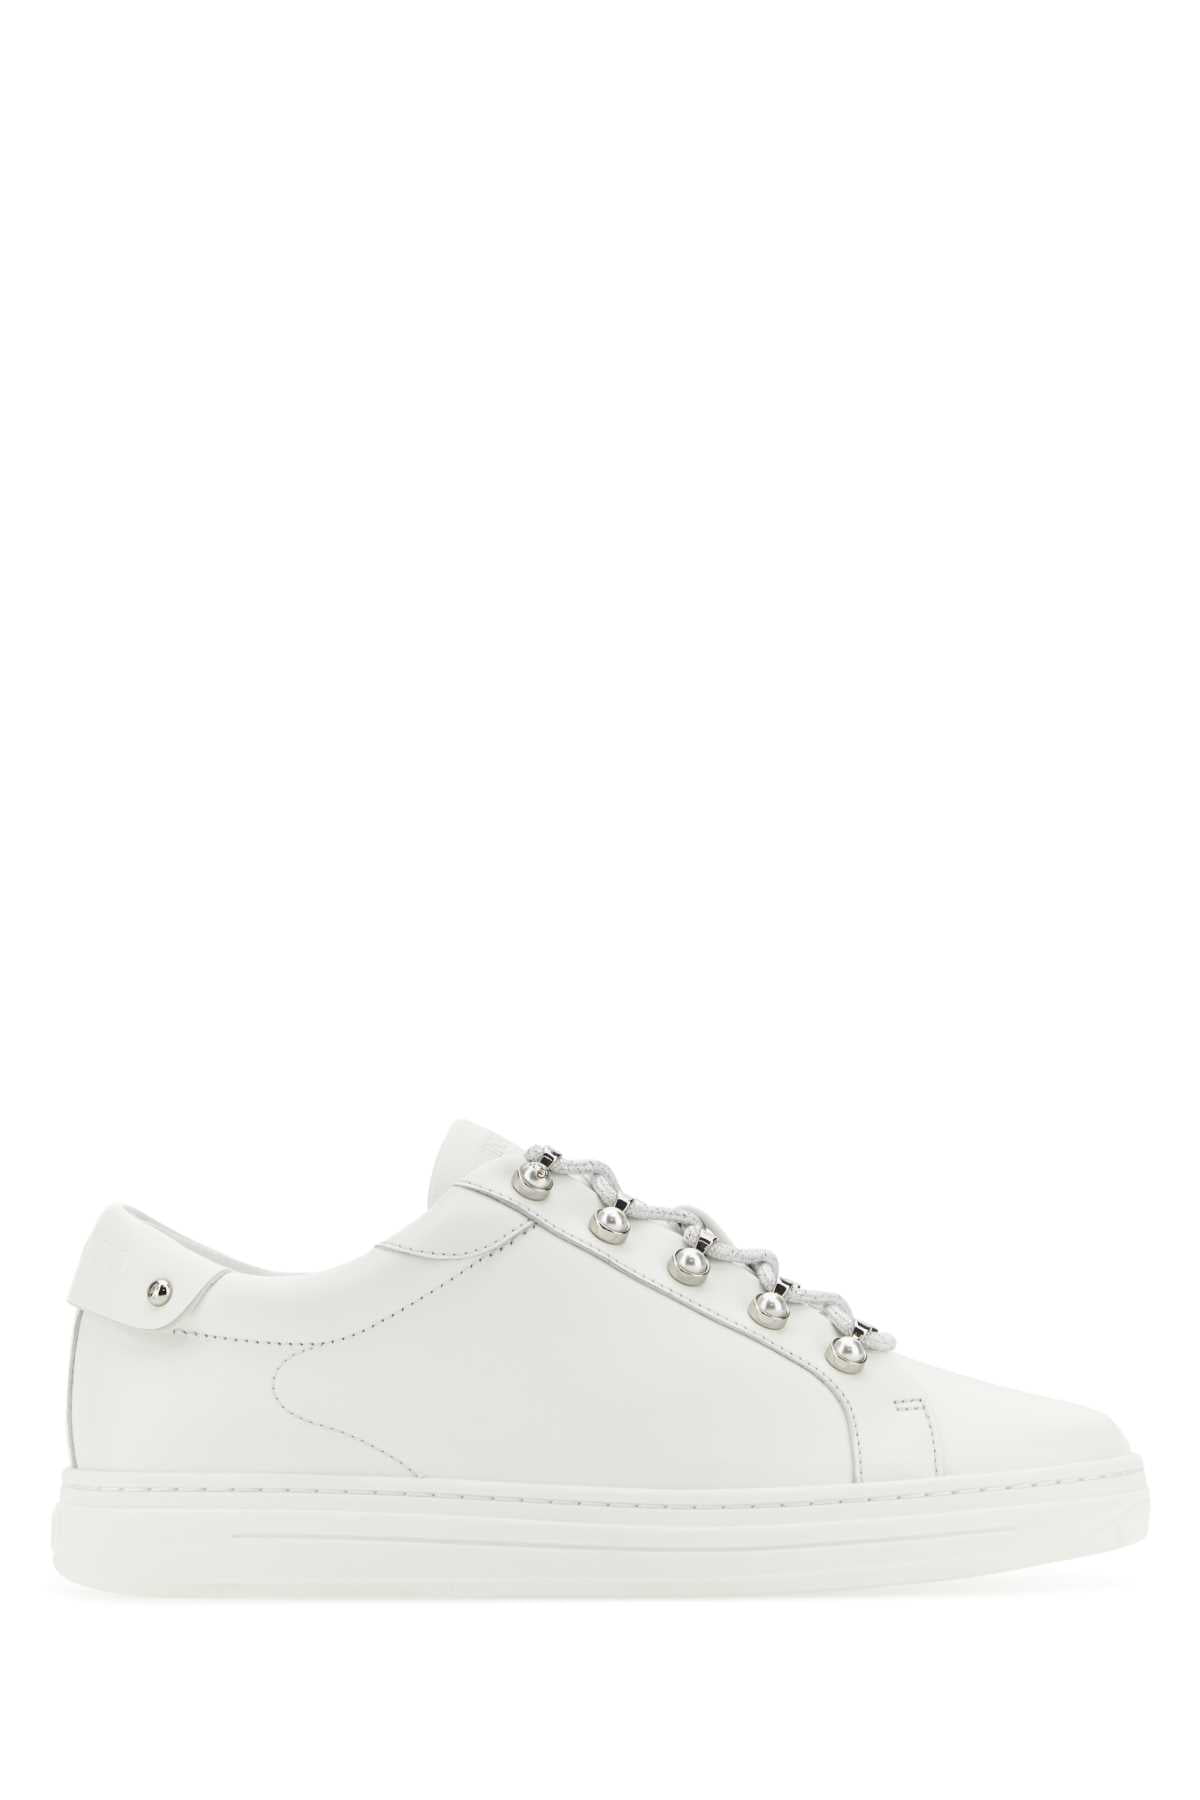 CHOO WOMAN White Leather Antibes Sneakers - Walmart.com